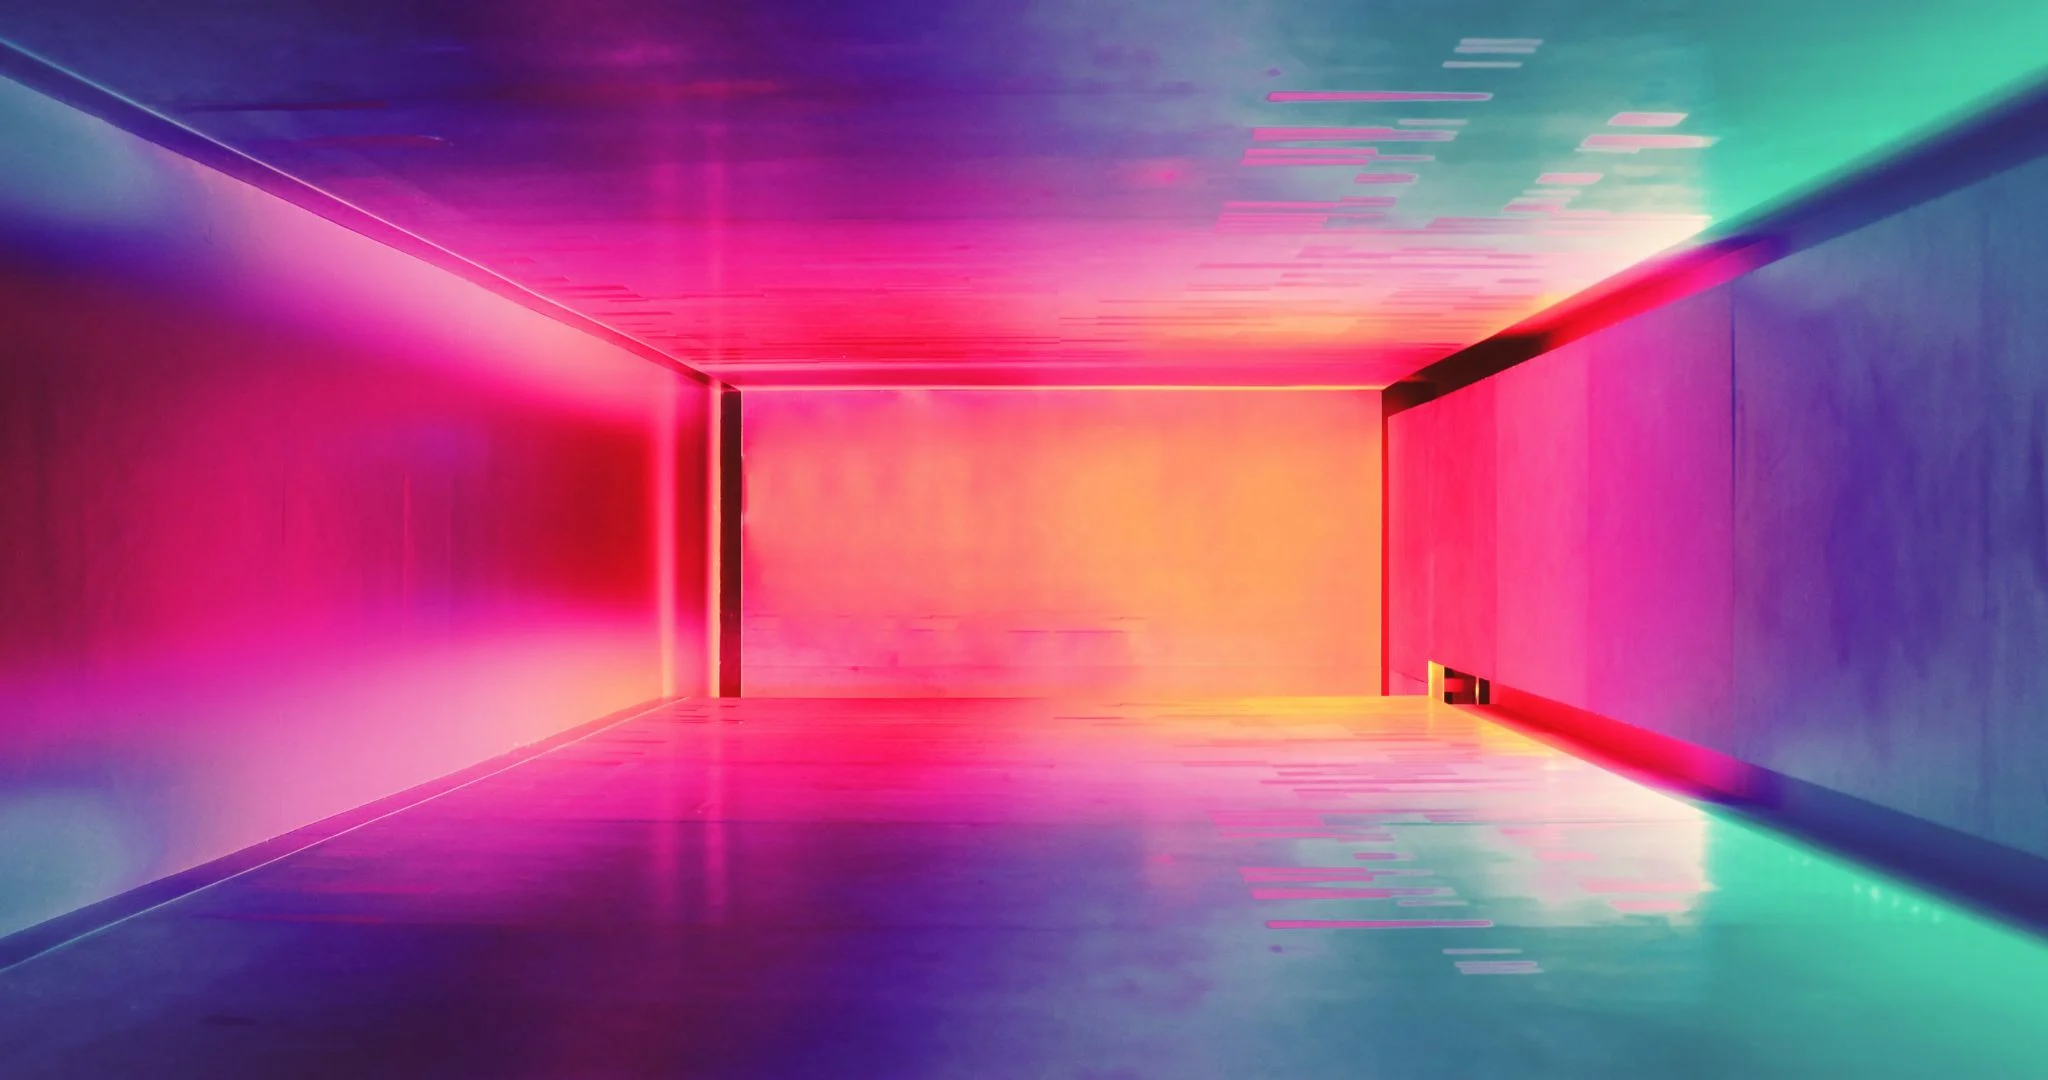 A hallway with neon lighting. Source: Efe Kurnaz/Unsplash